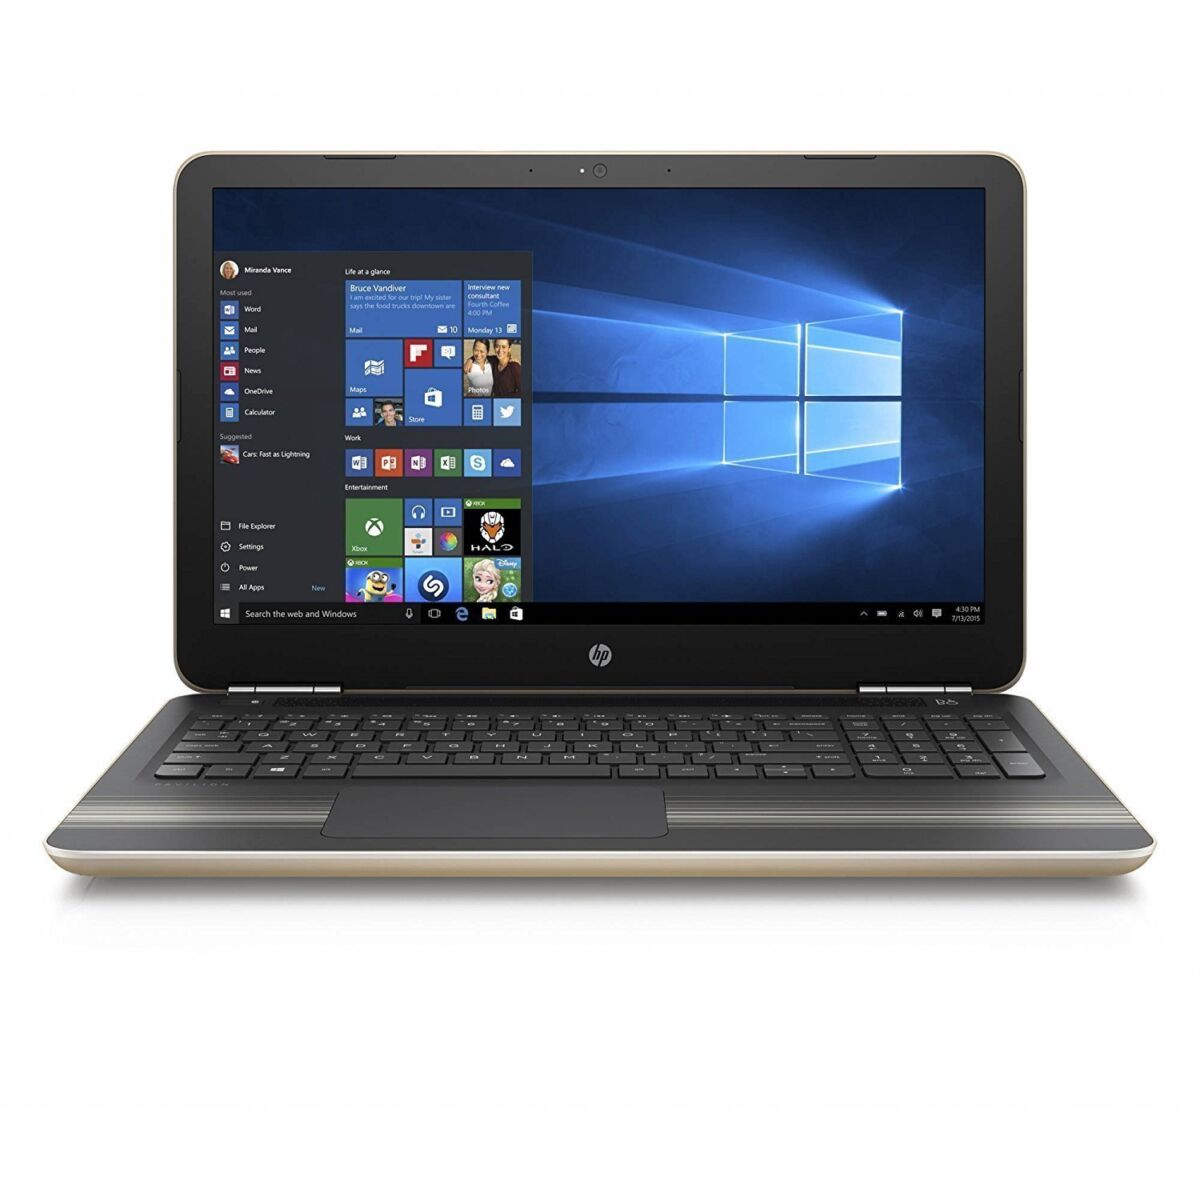 HP Pavilion 15.6in HD Flagship Laptop Computer, Intel Dual Core i5-6200U 2.3Ghz, 8GB DDR3 RAM, 1TB HDD, DVDRW, USB 3.0, HDMI, Bluetooth, HD Webcam, 802.11ac WIFI, Windows 10 (Renewed) | The Storepaperoomates Retail Market - Fast Affordable Shopping